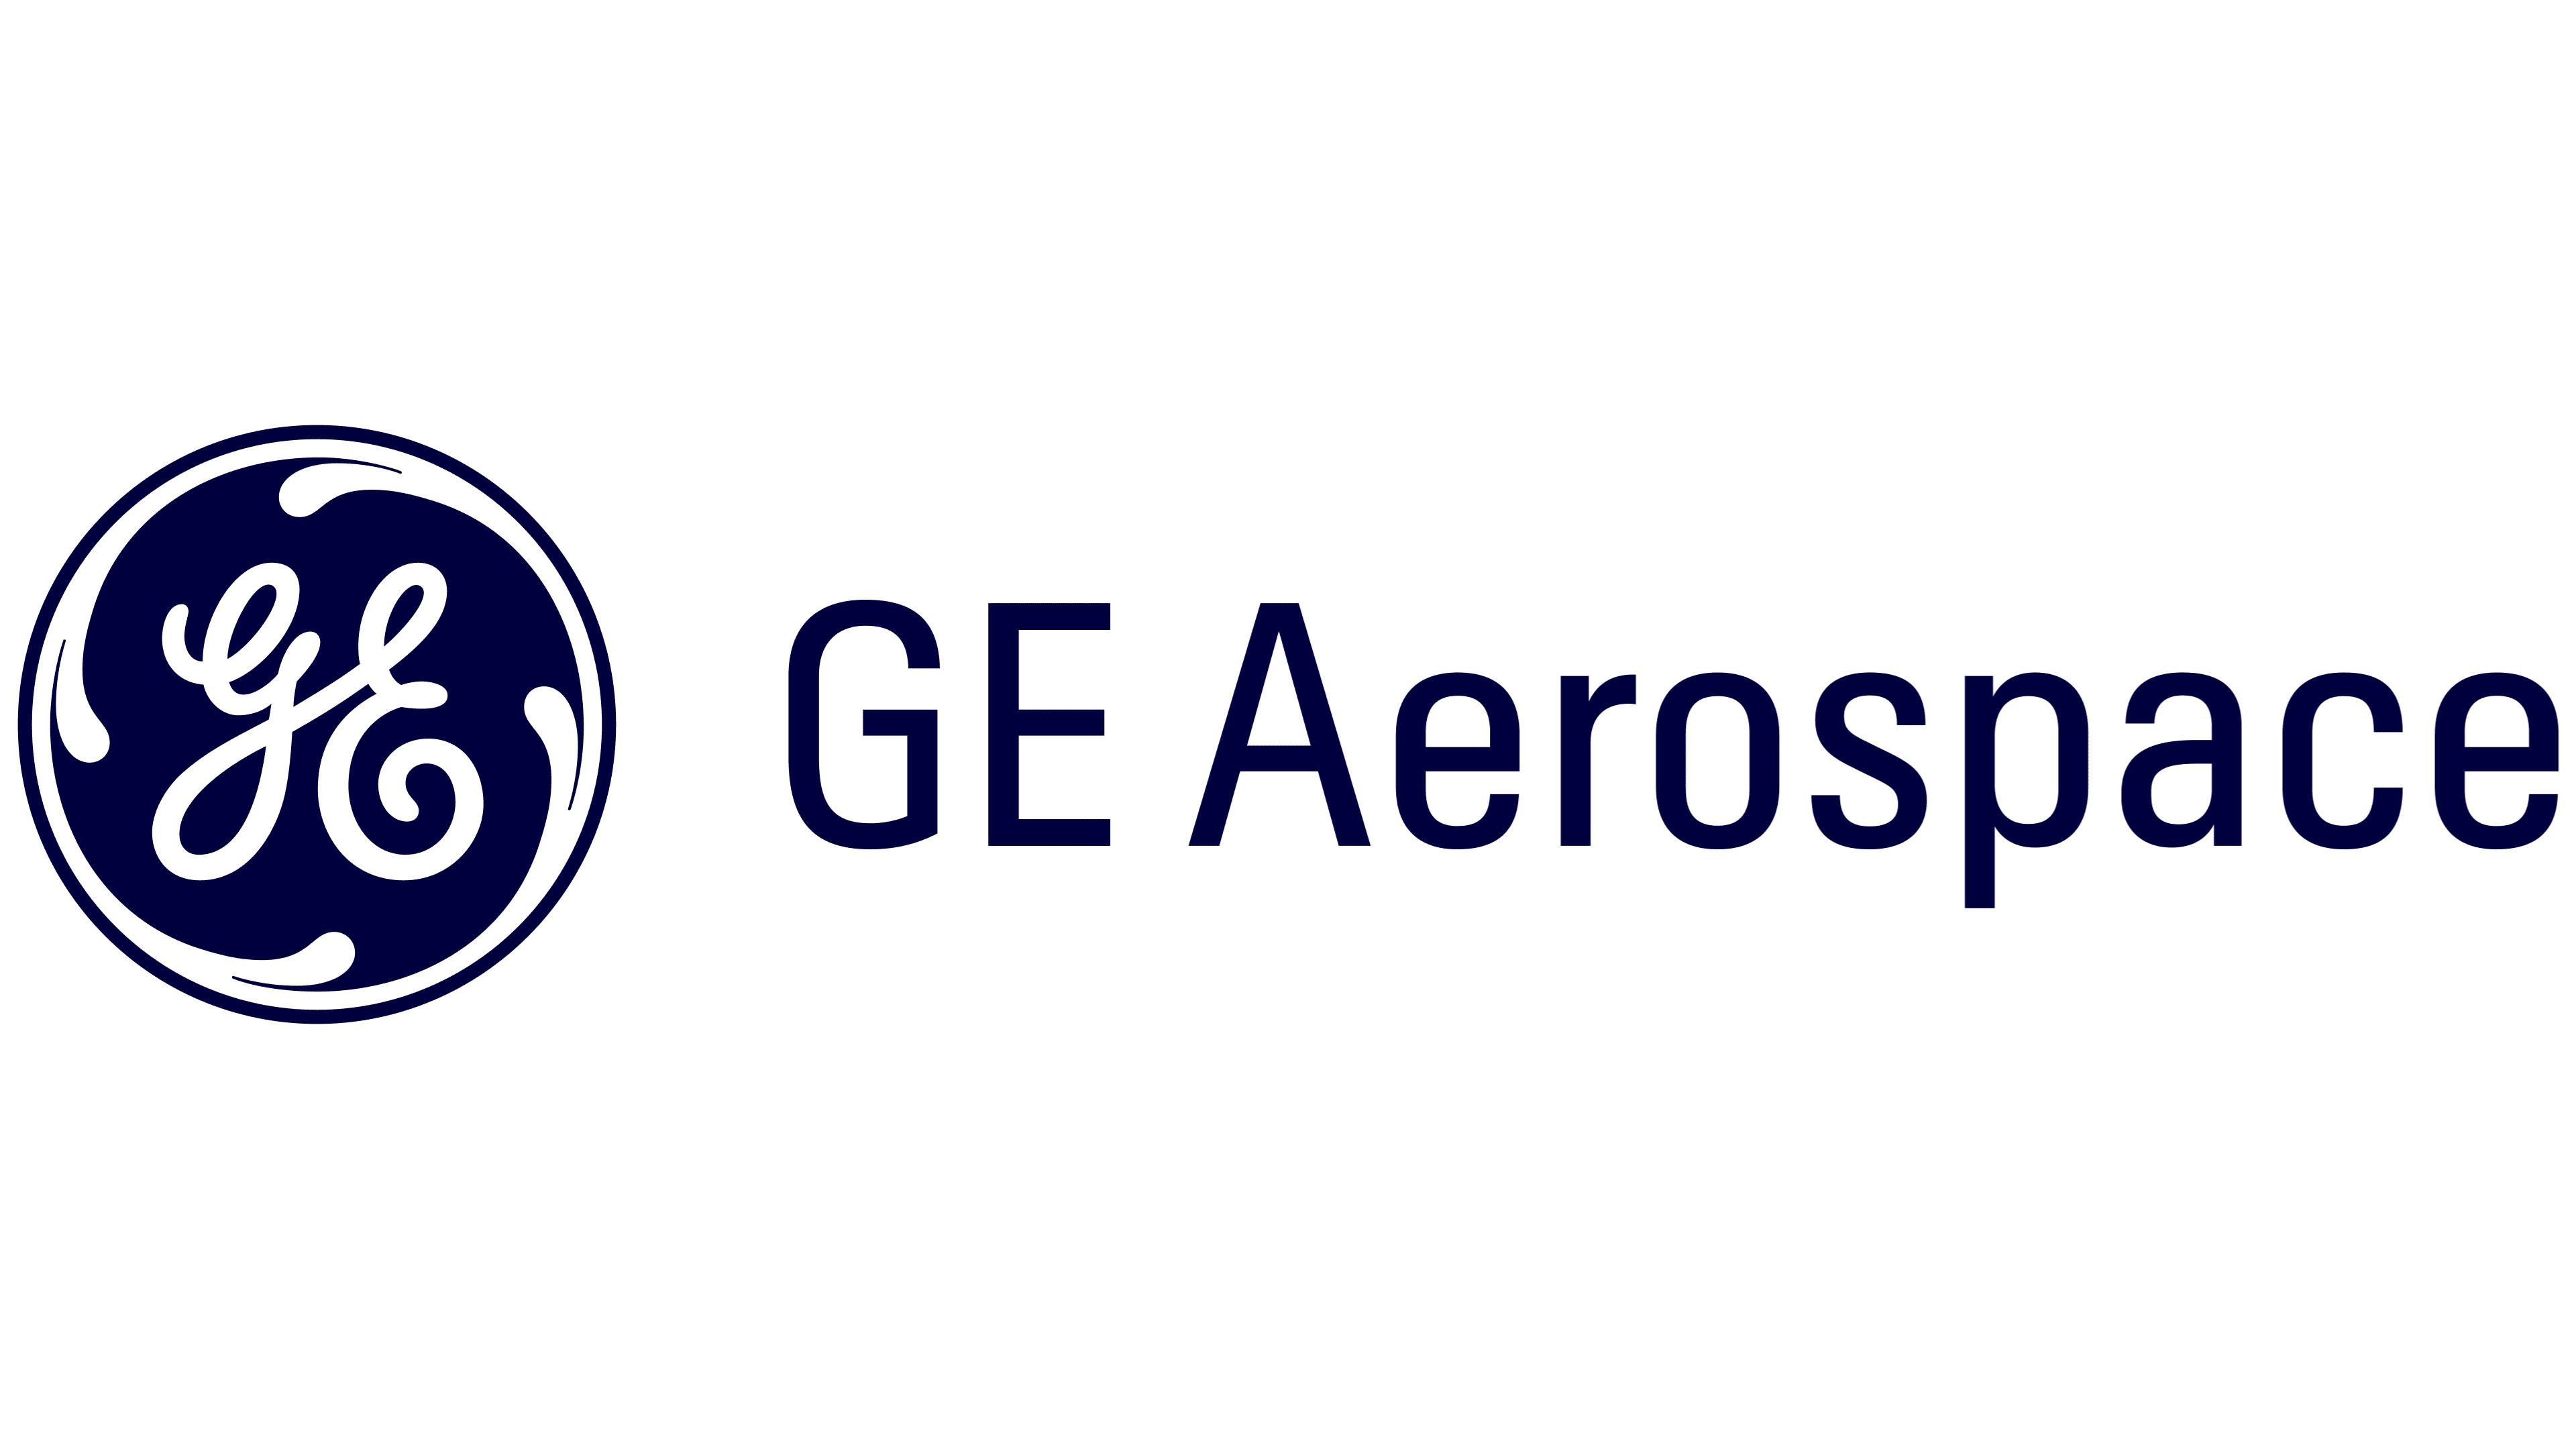 GE Aerospace